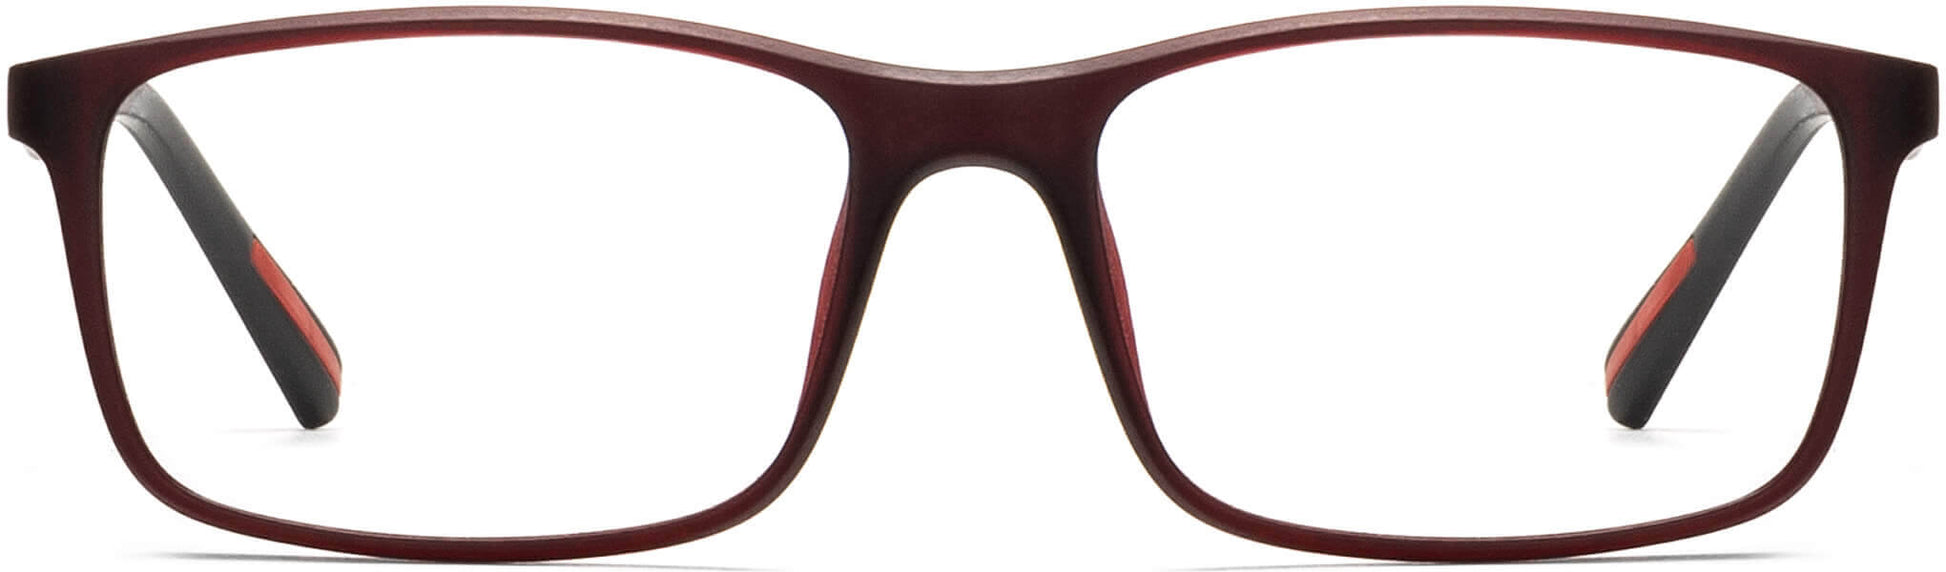 Reid Black TR90 Eyeglasses from ANRRI, Front View